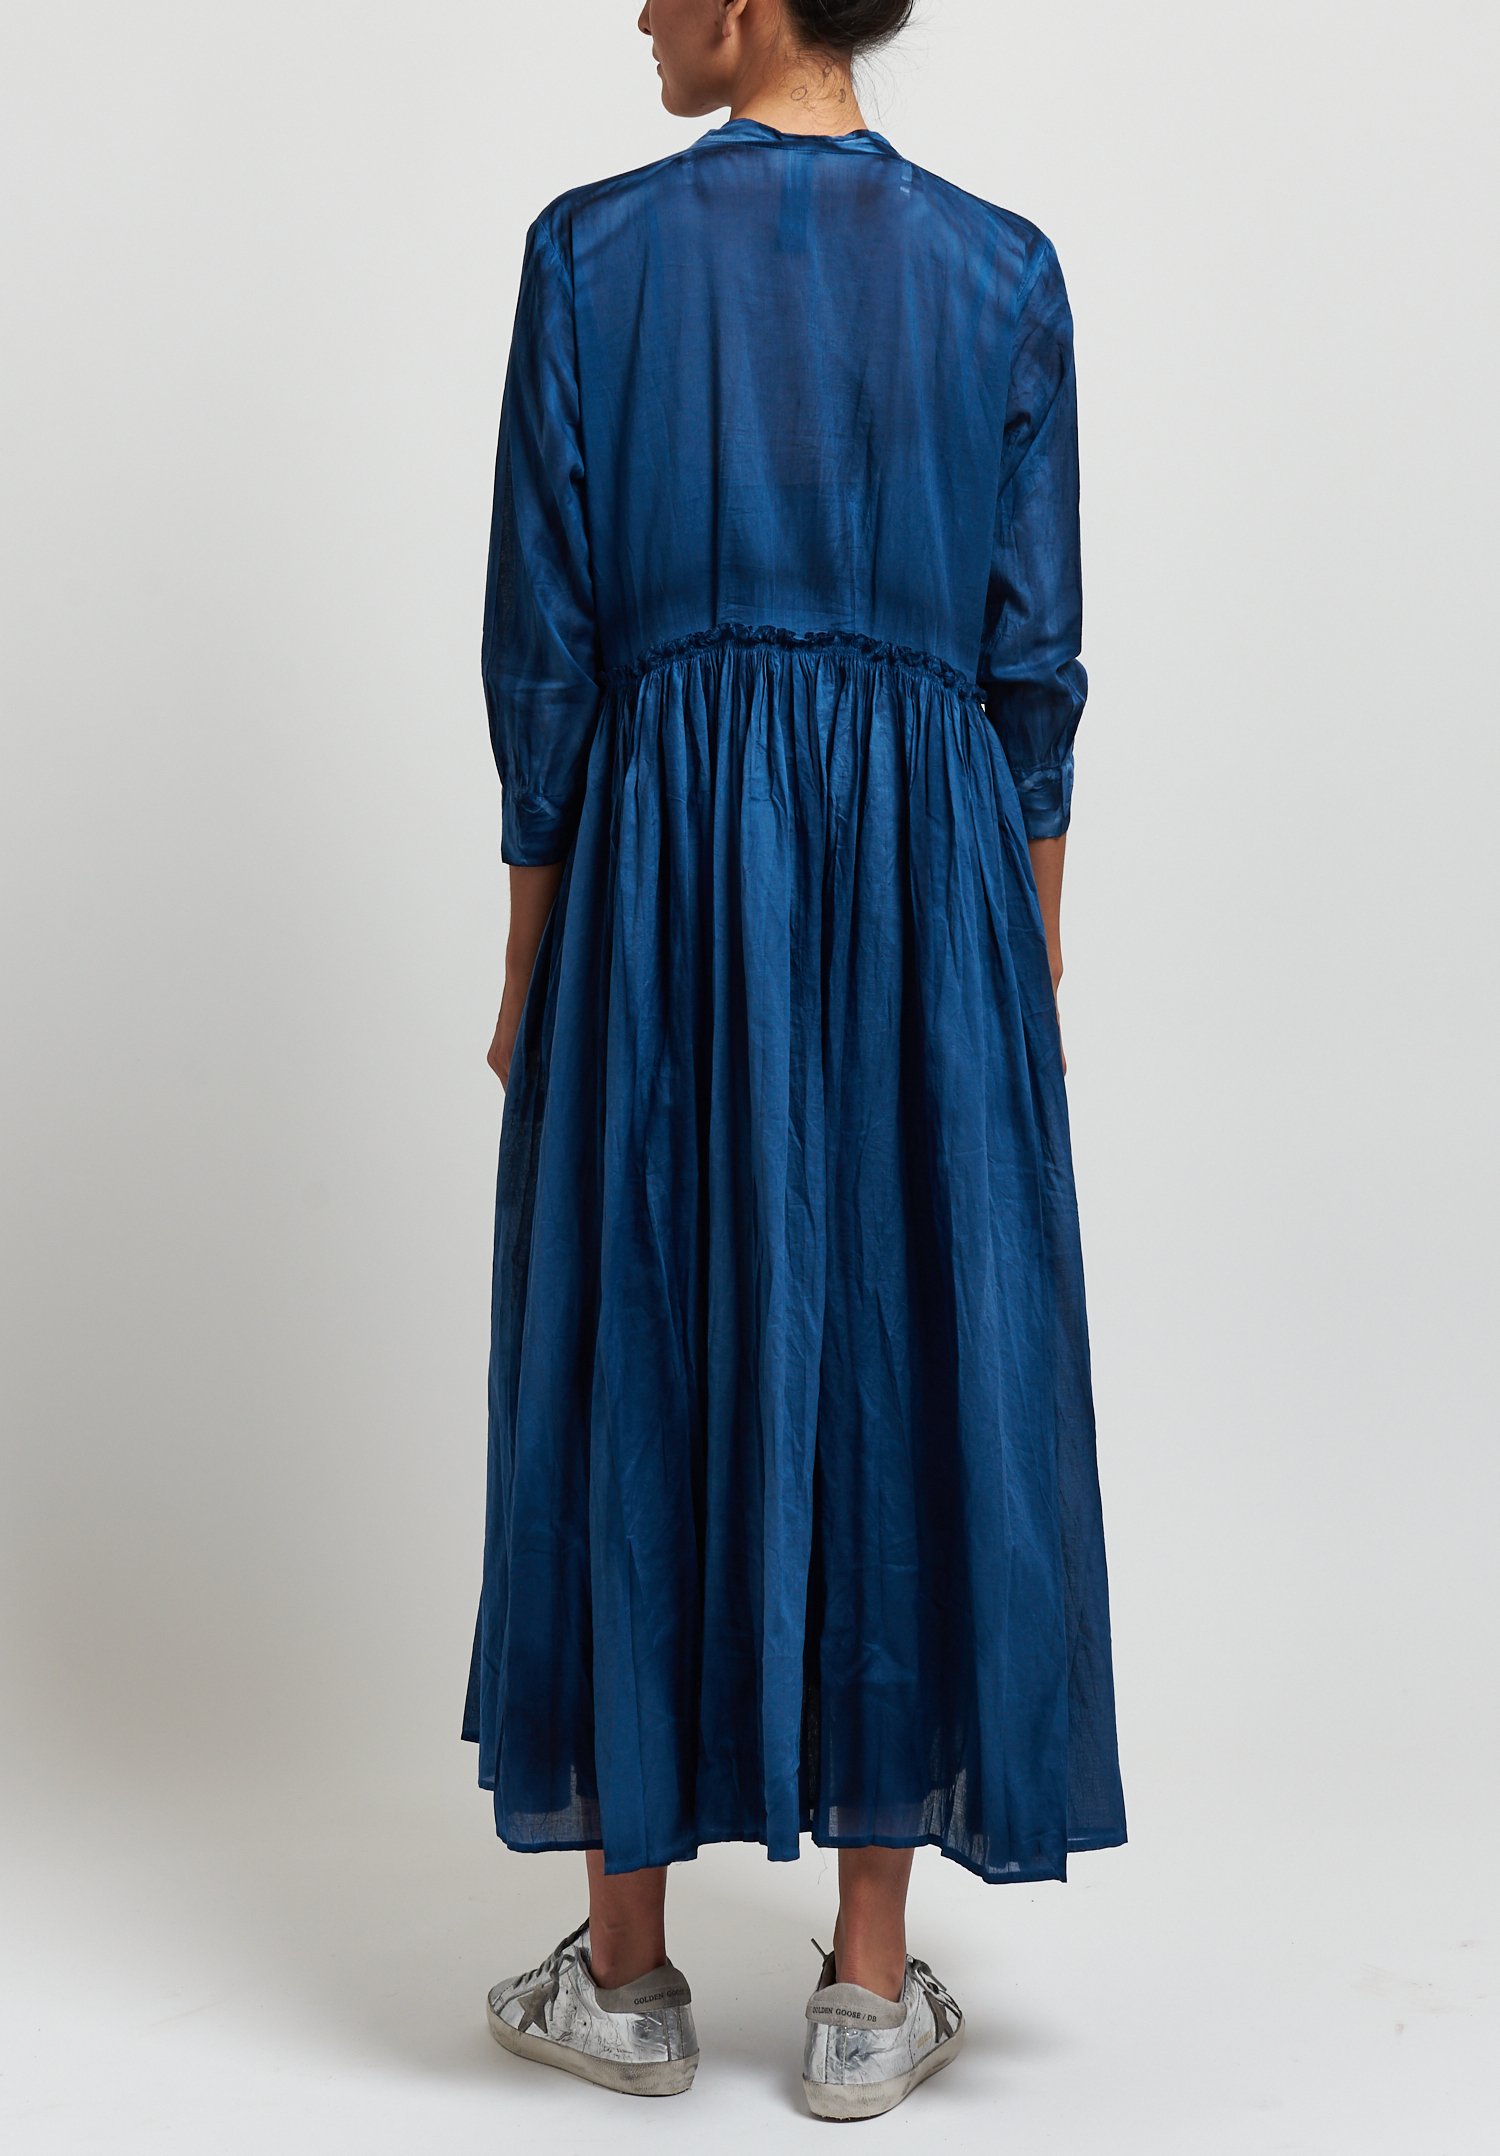 Gilda Midani Voile Princess Dress in Indigo Blue | Santa Fe Dry Goods ...